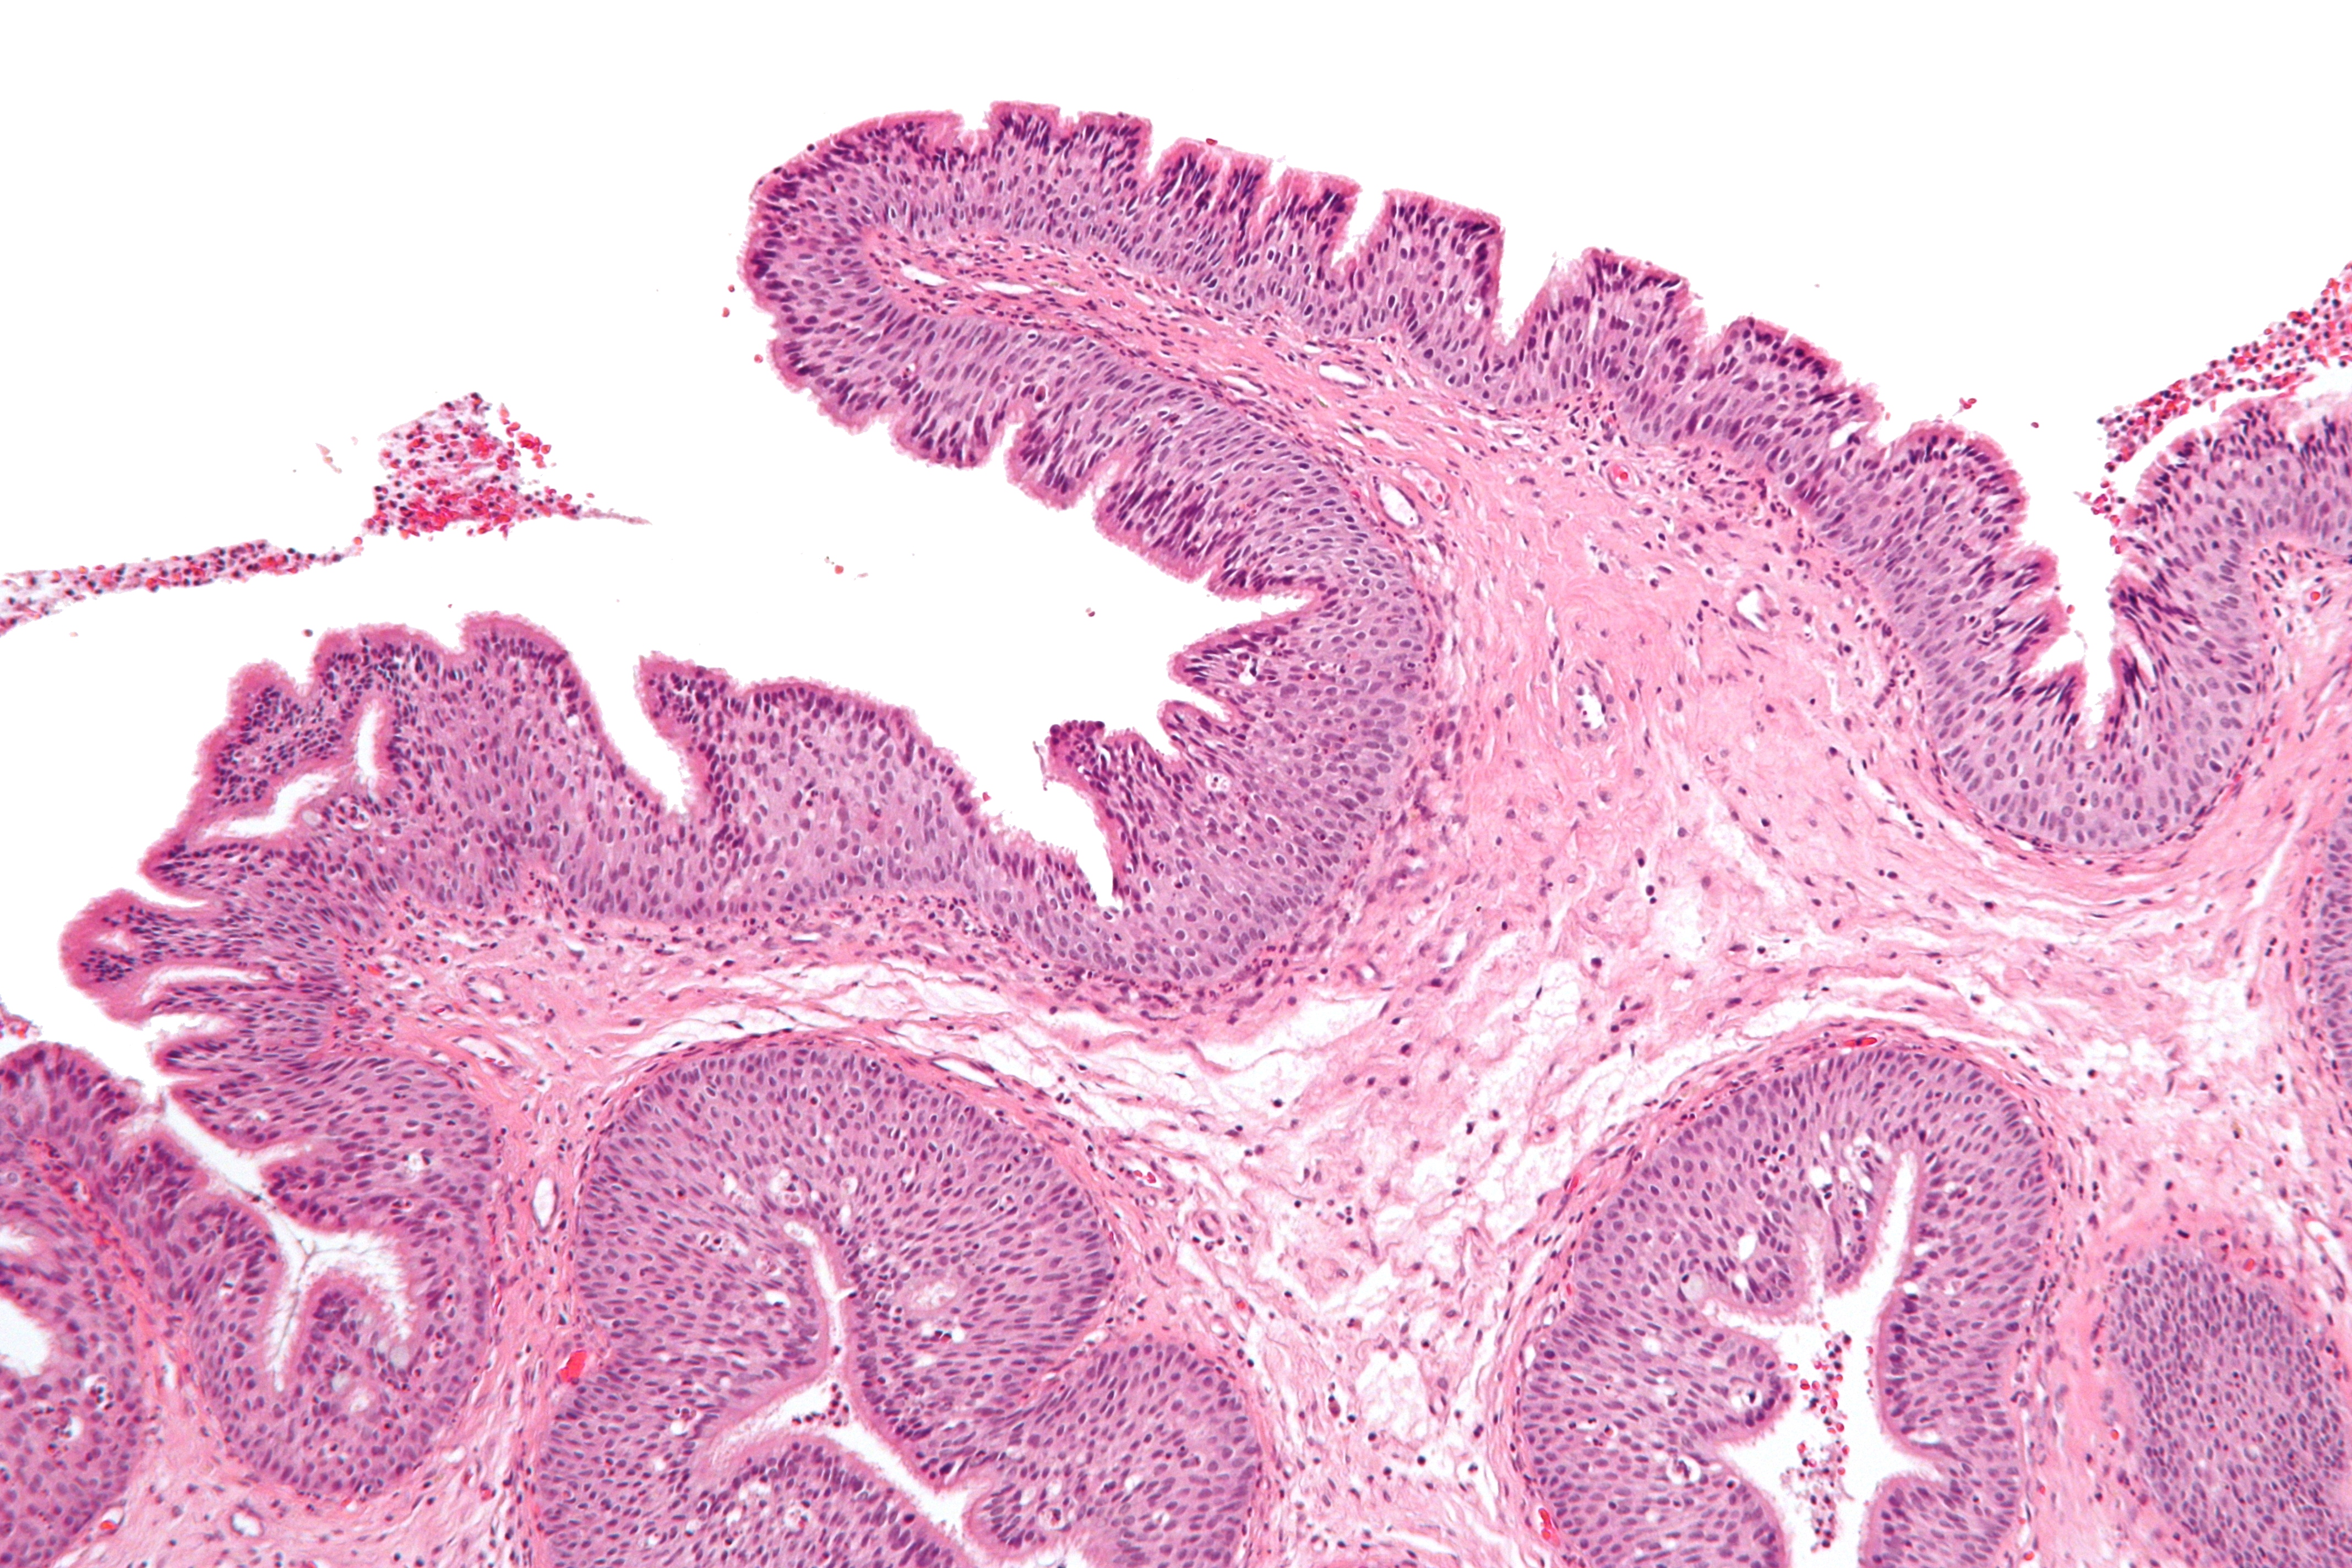 Sinonasal papilloma pathology outlines, Sinonasal inverted papilloma pathology outlines